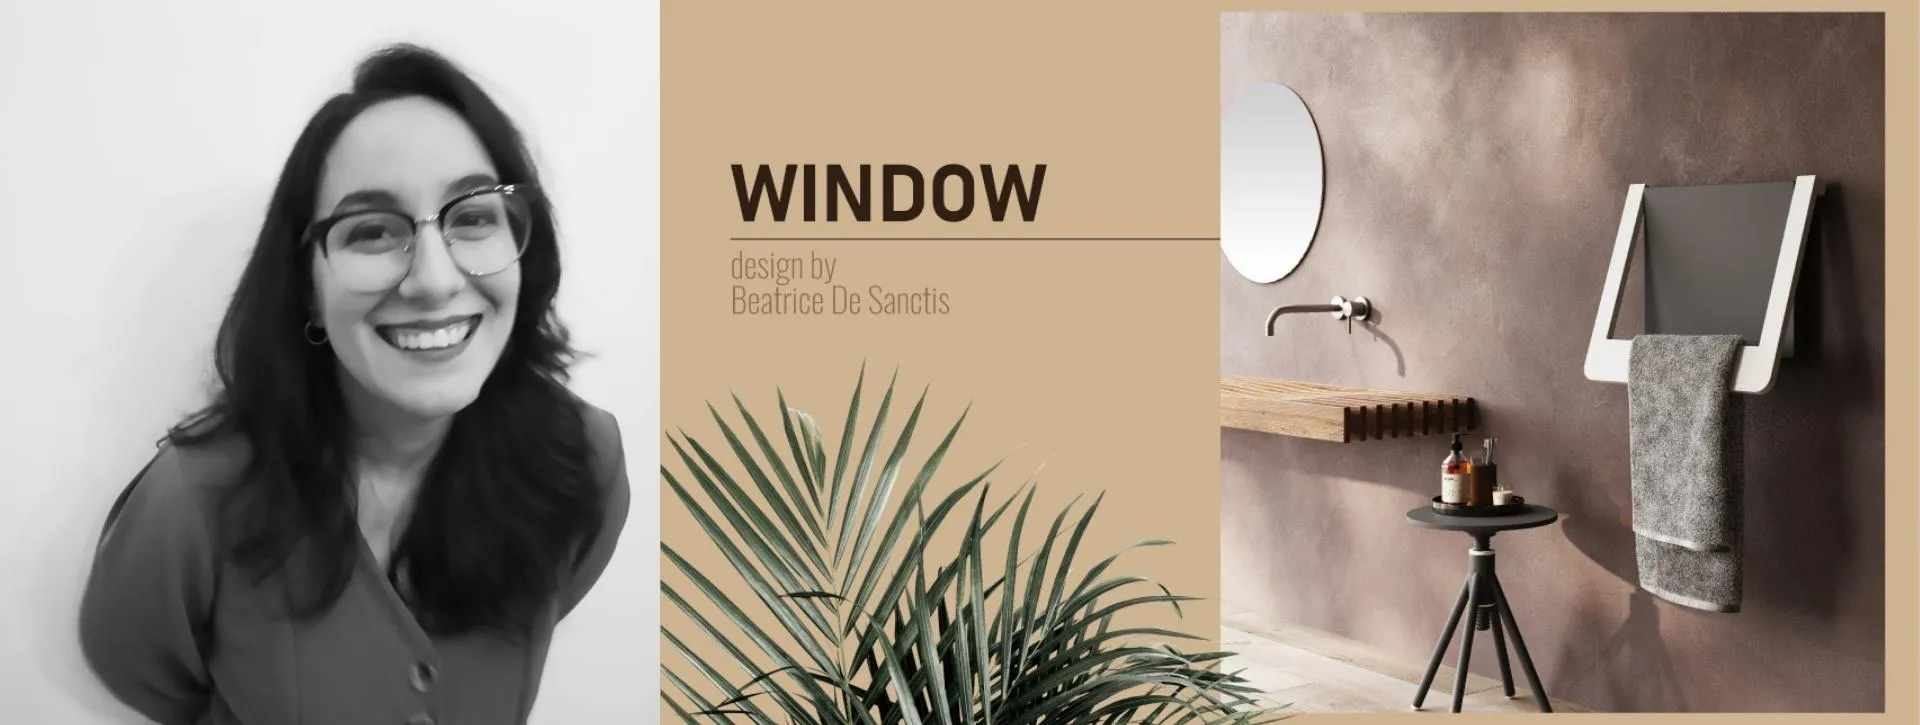 Window - Designer Beatrice De Sanctis